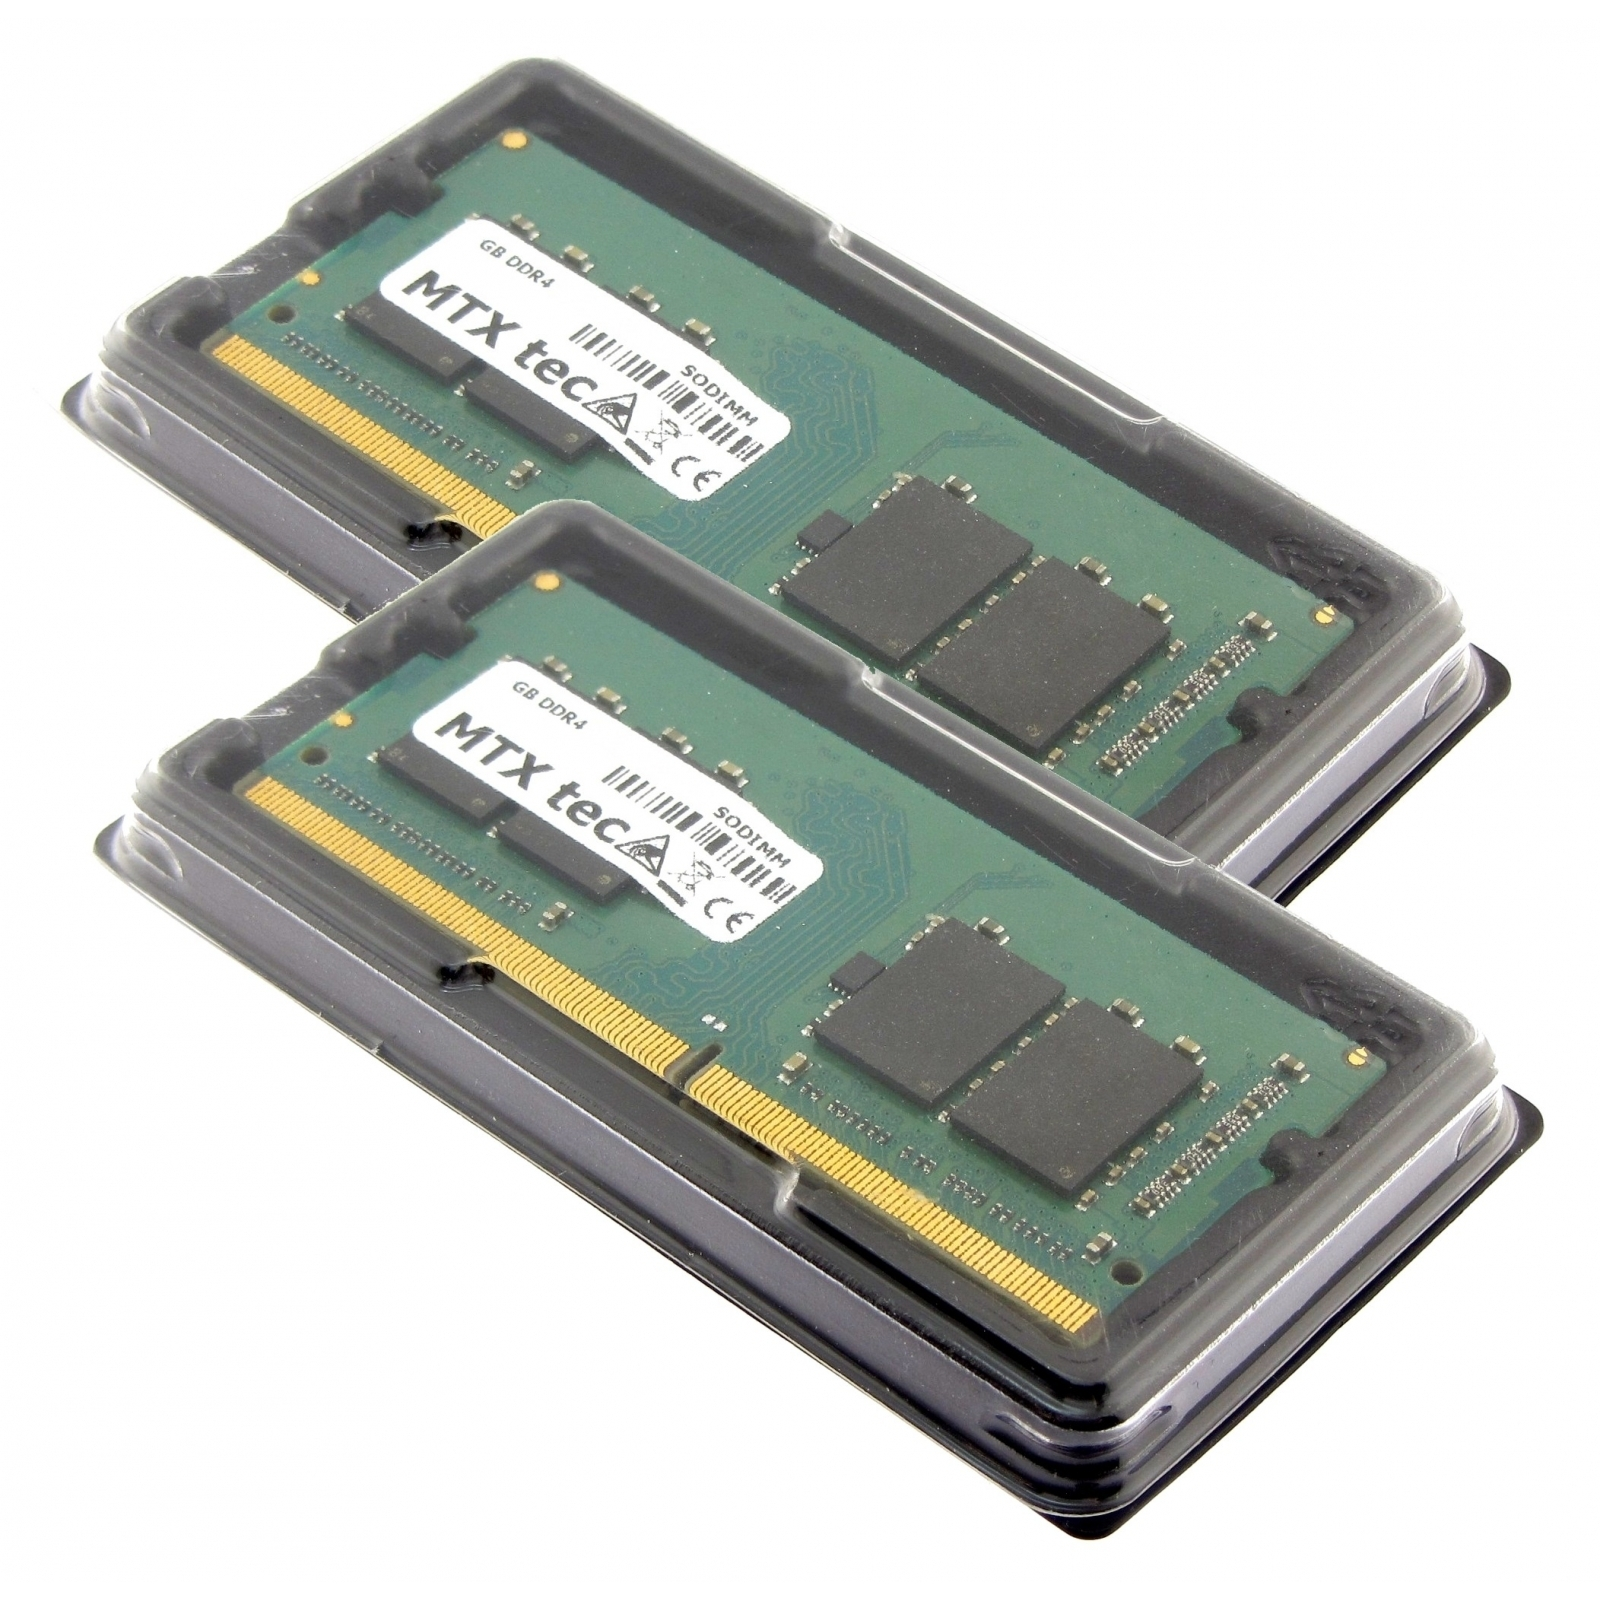 MTXTEC 16GB Kit 2x Notebook-Speicher 260 DDR4 Notebook PC4-17000 2133MHz 8 GB pin DDR4 Arbeitsspeicher SODIMM 8GB